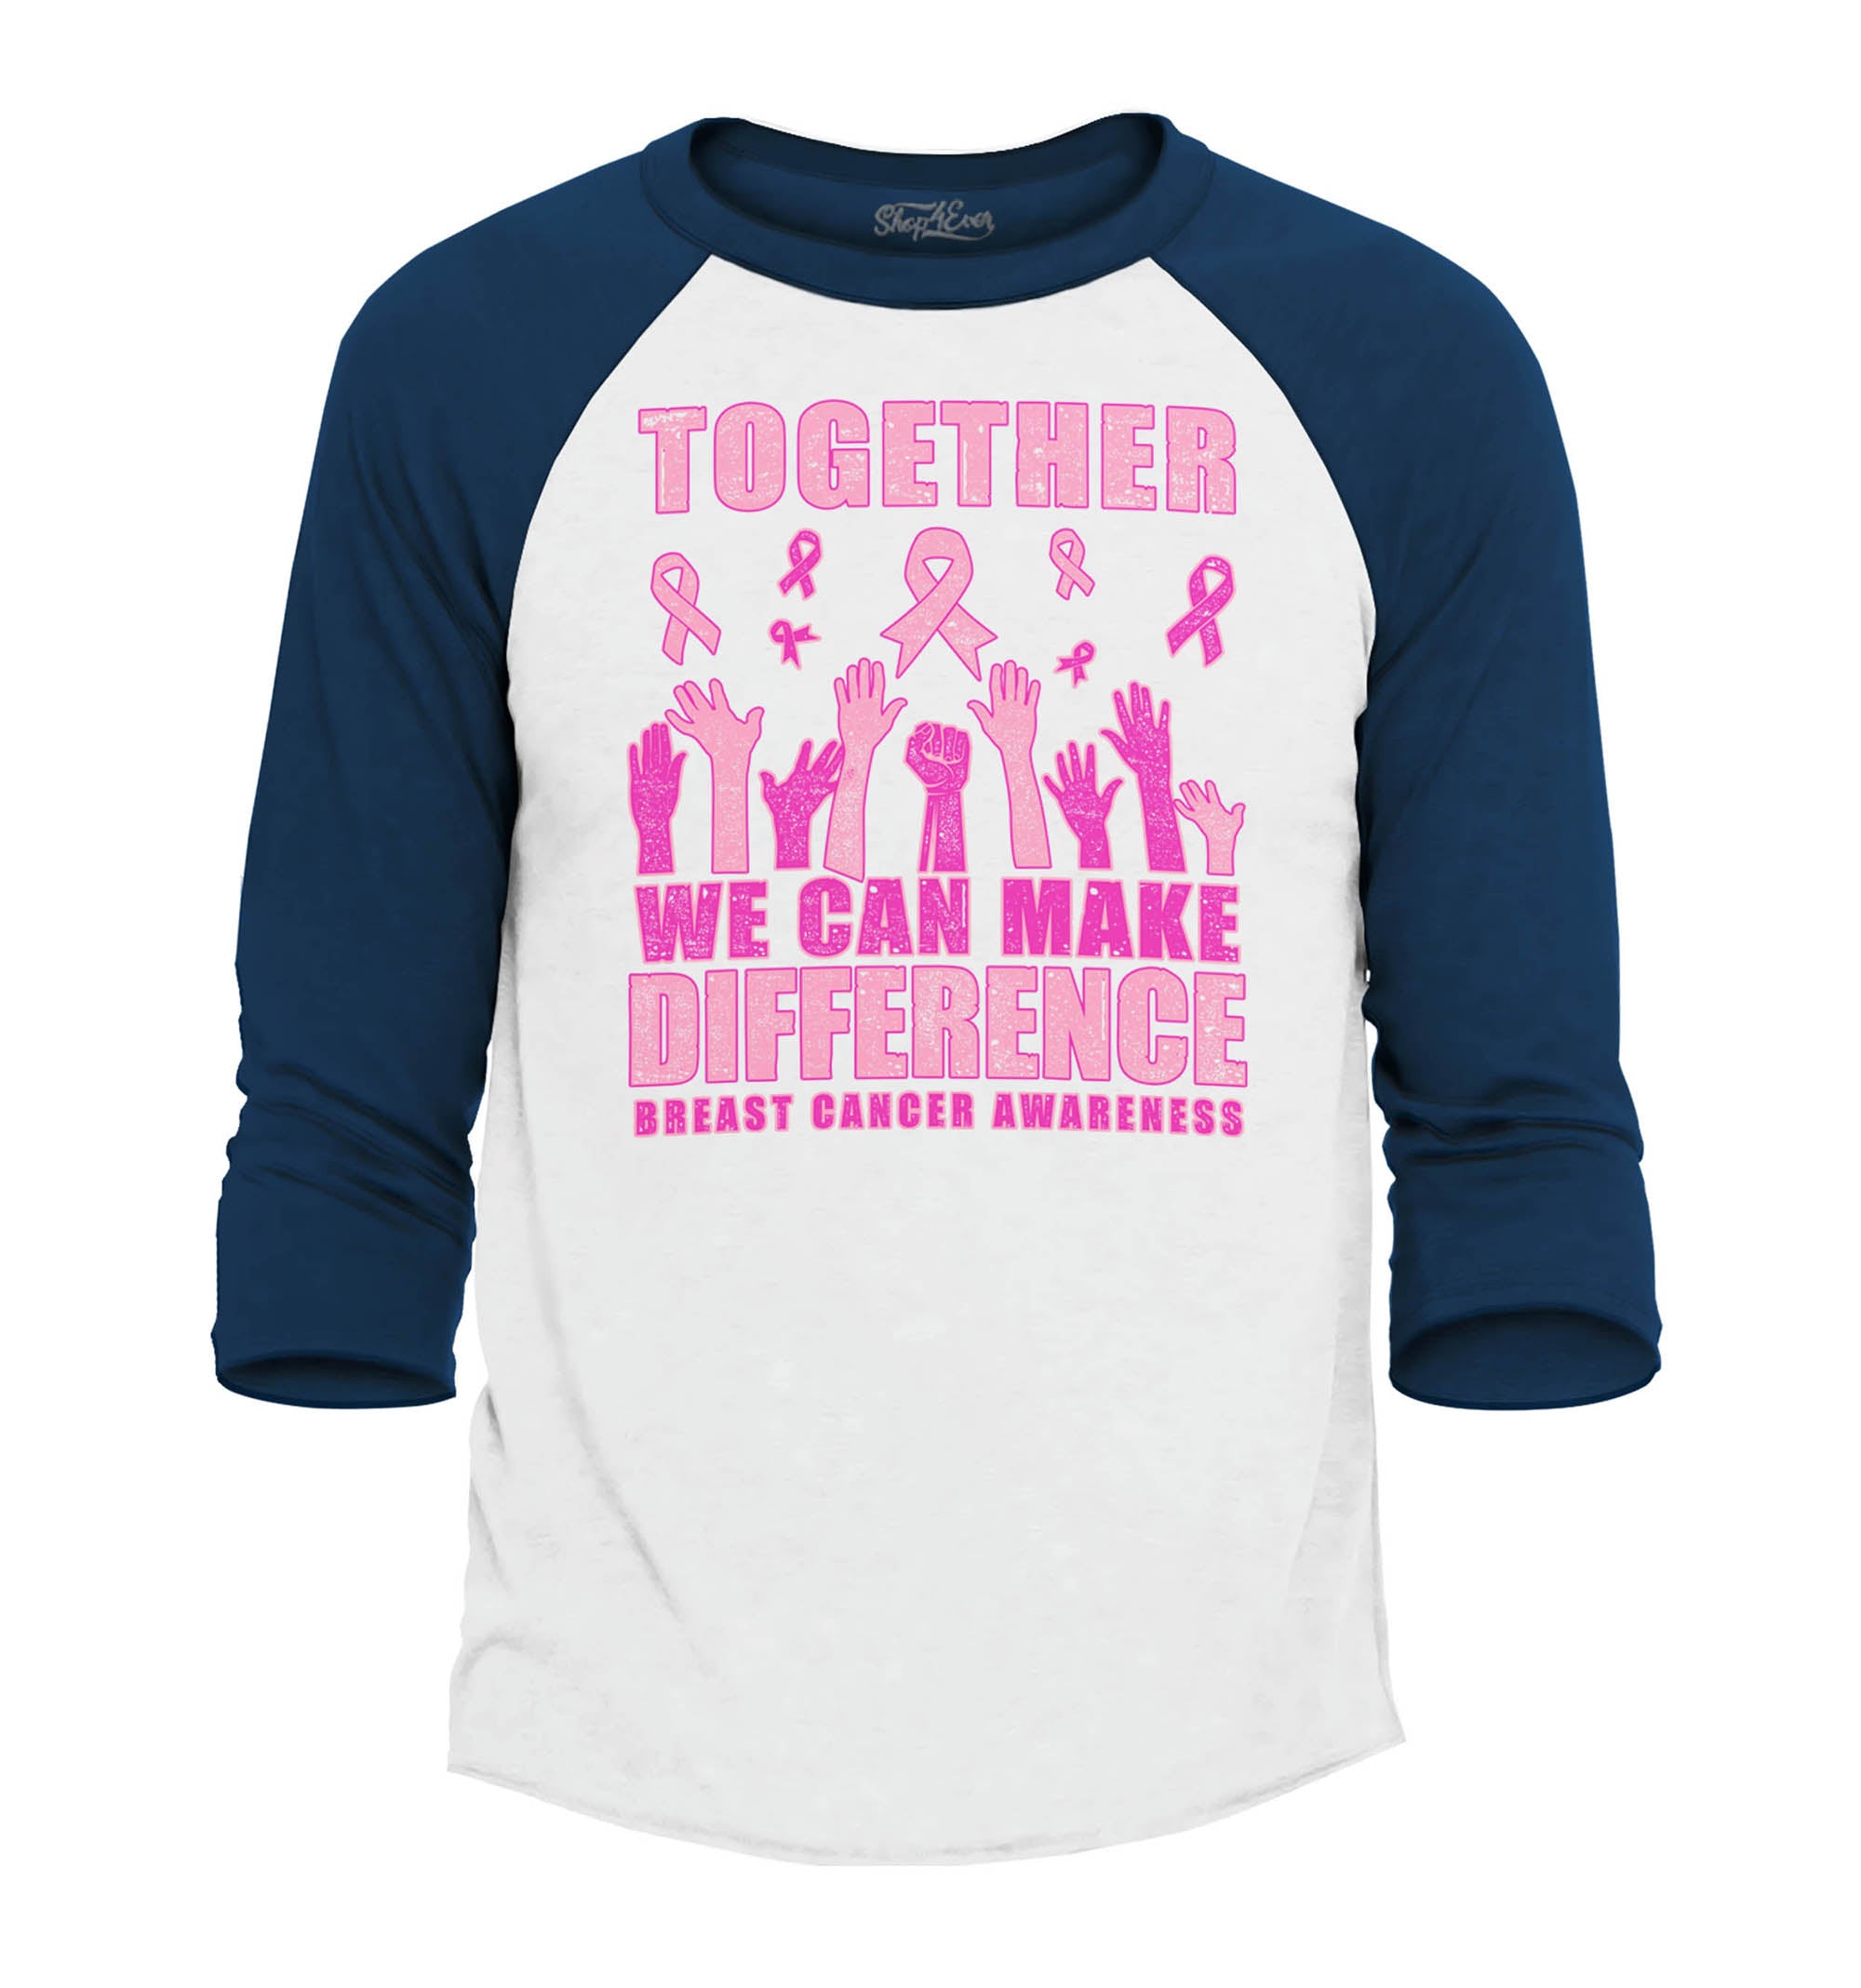 Together We Can Make A Difference Breast Cancer Awareness Raglan Baseball Shirt